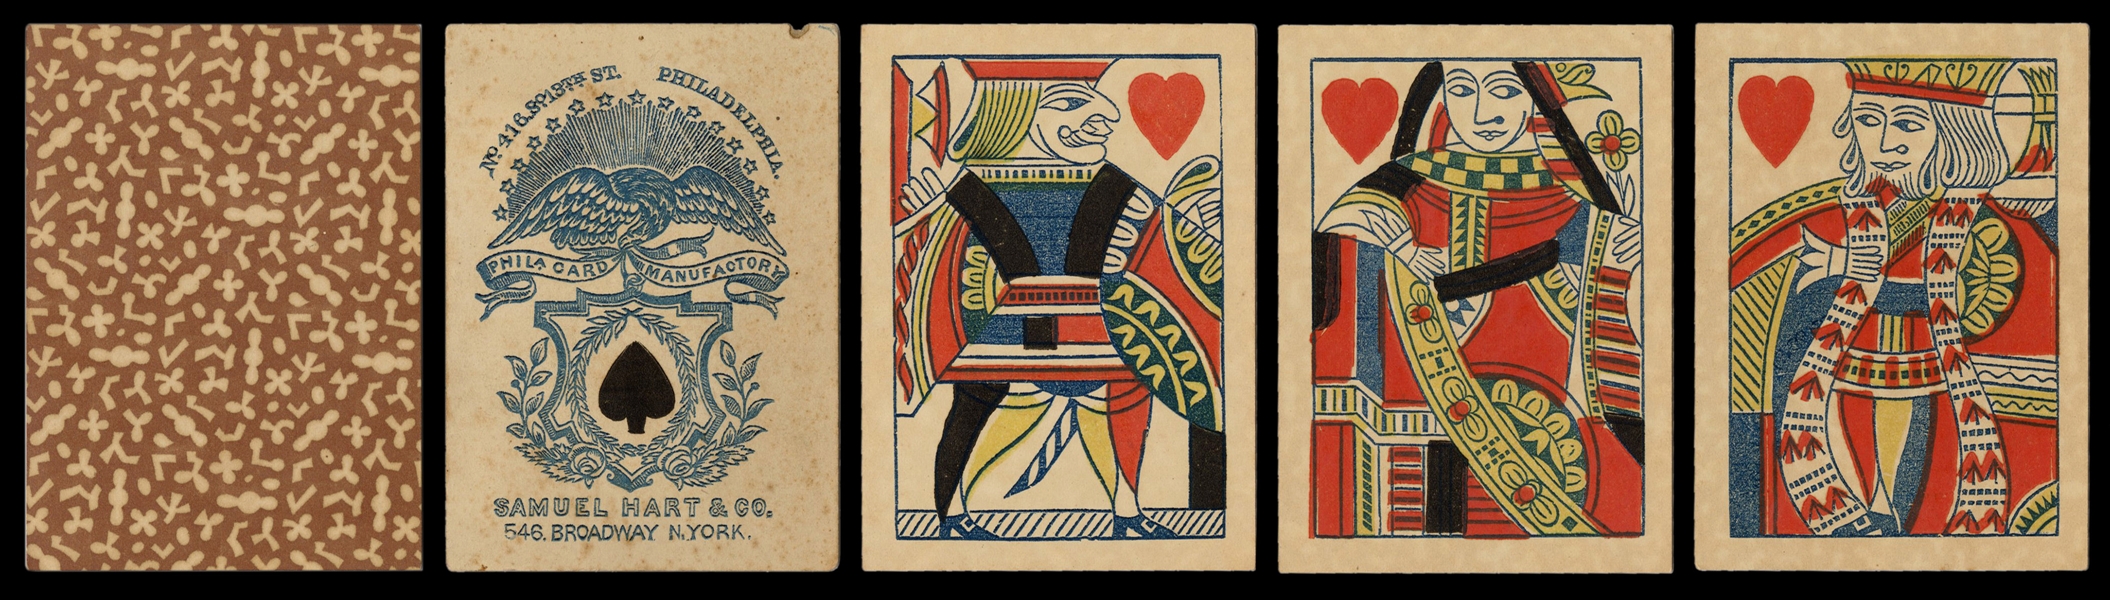  Samuel Hart & Co. Faro Playing Cards. New York/Philadelphia...